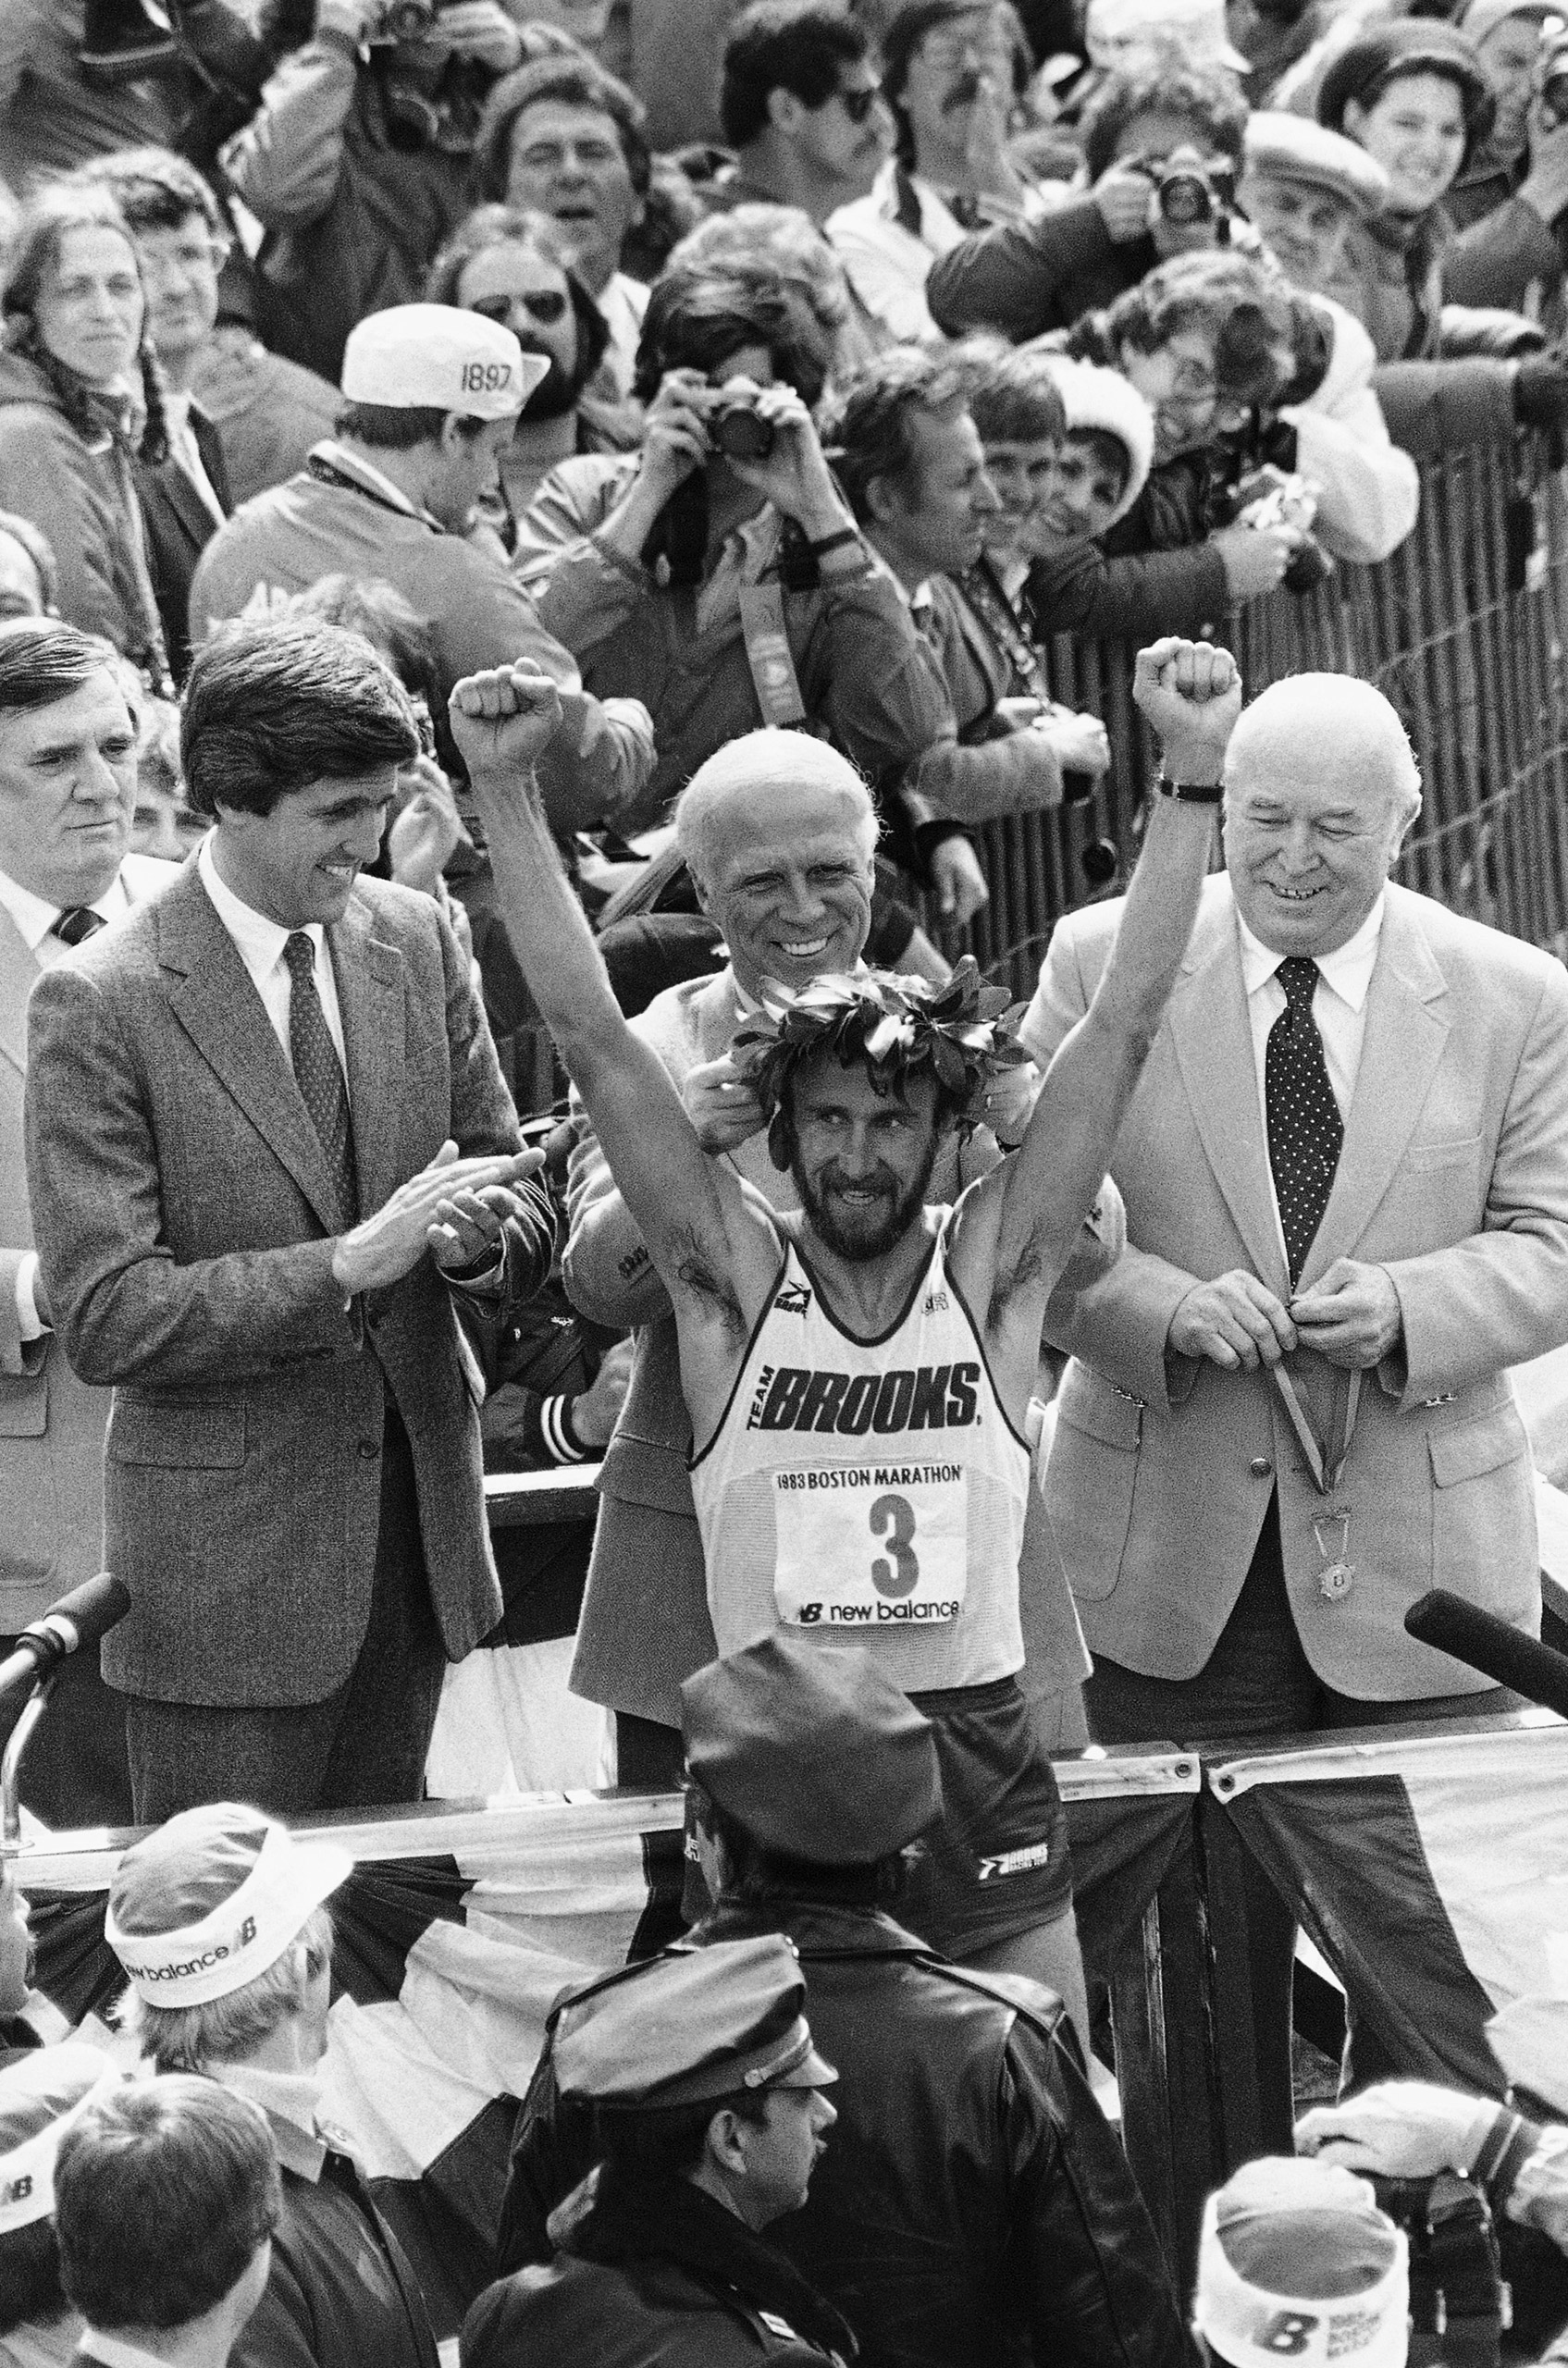 Greg Meyer, winner of the 1983 Boston Marathon